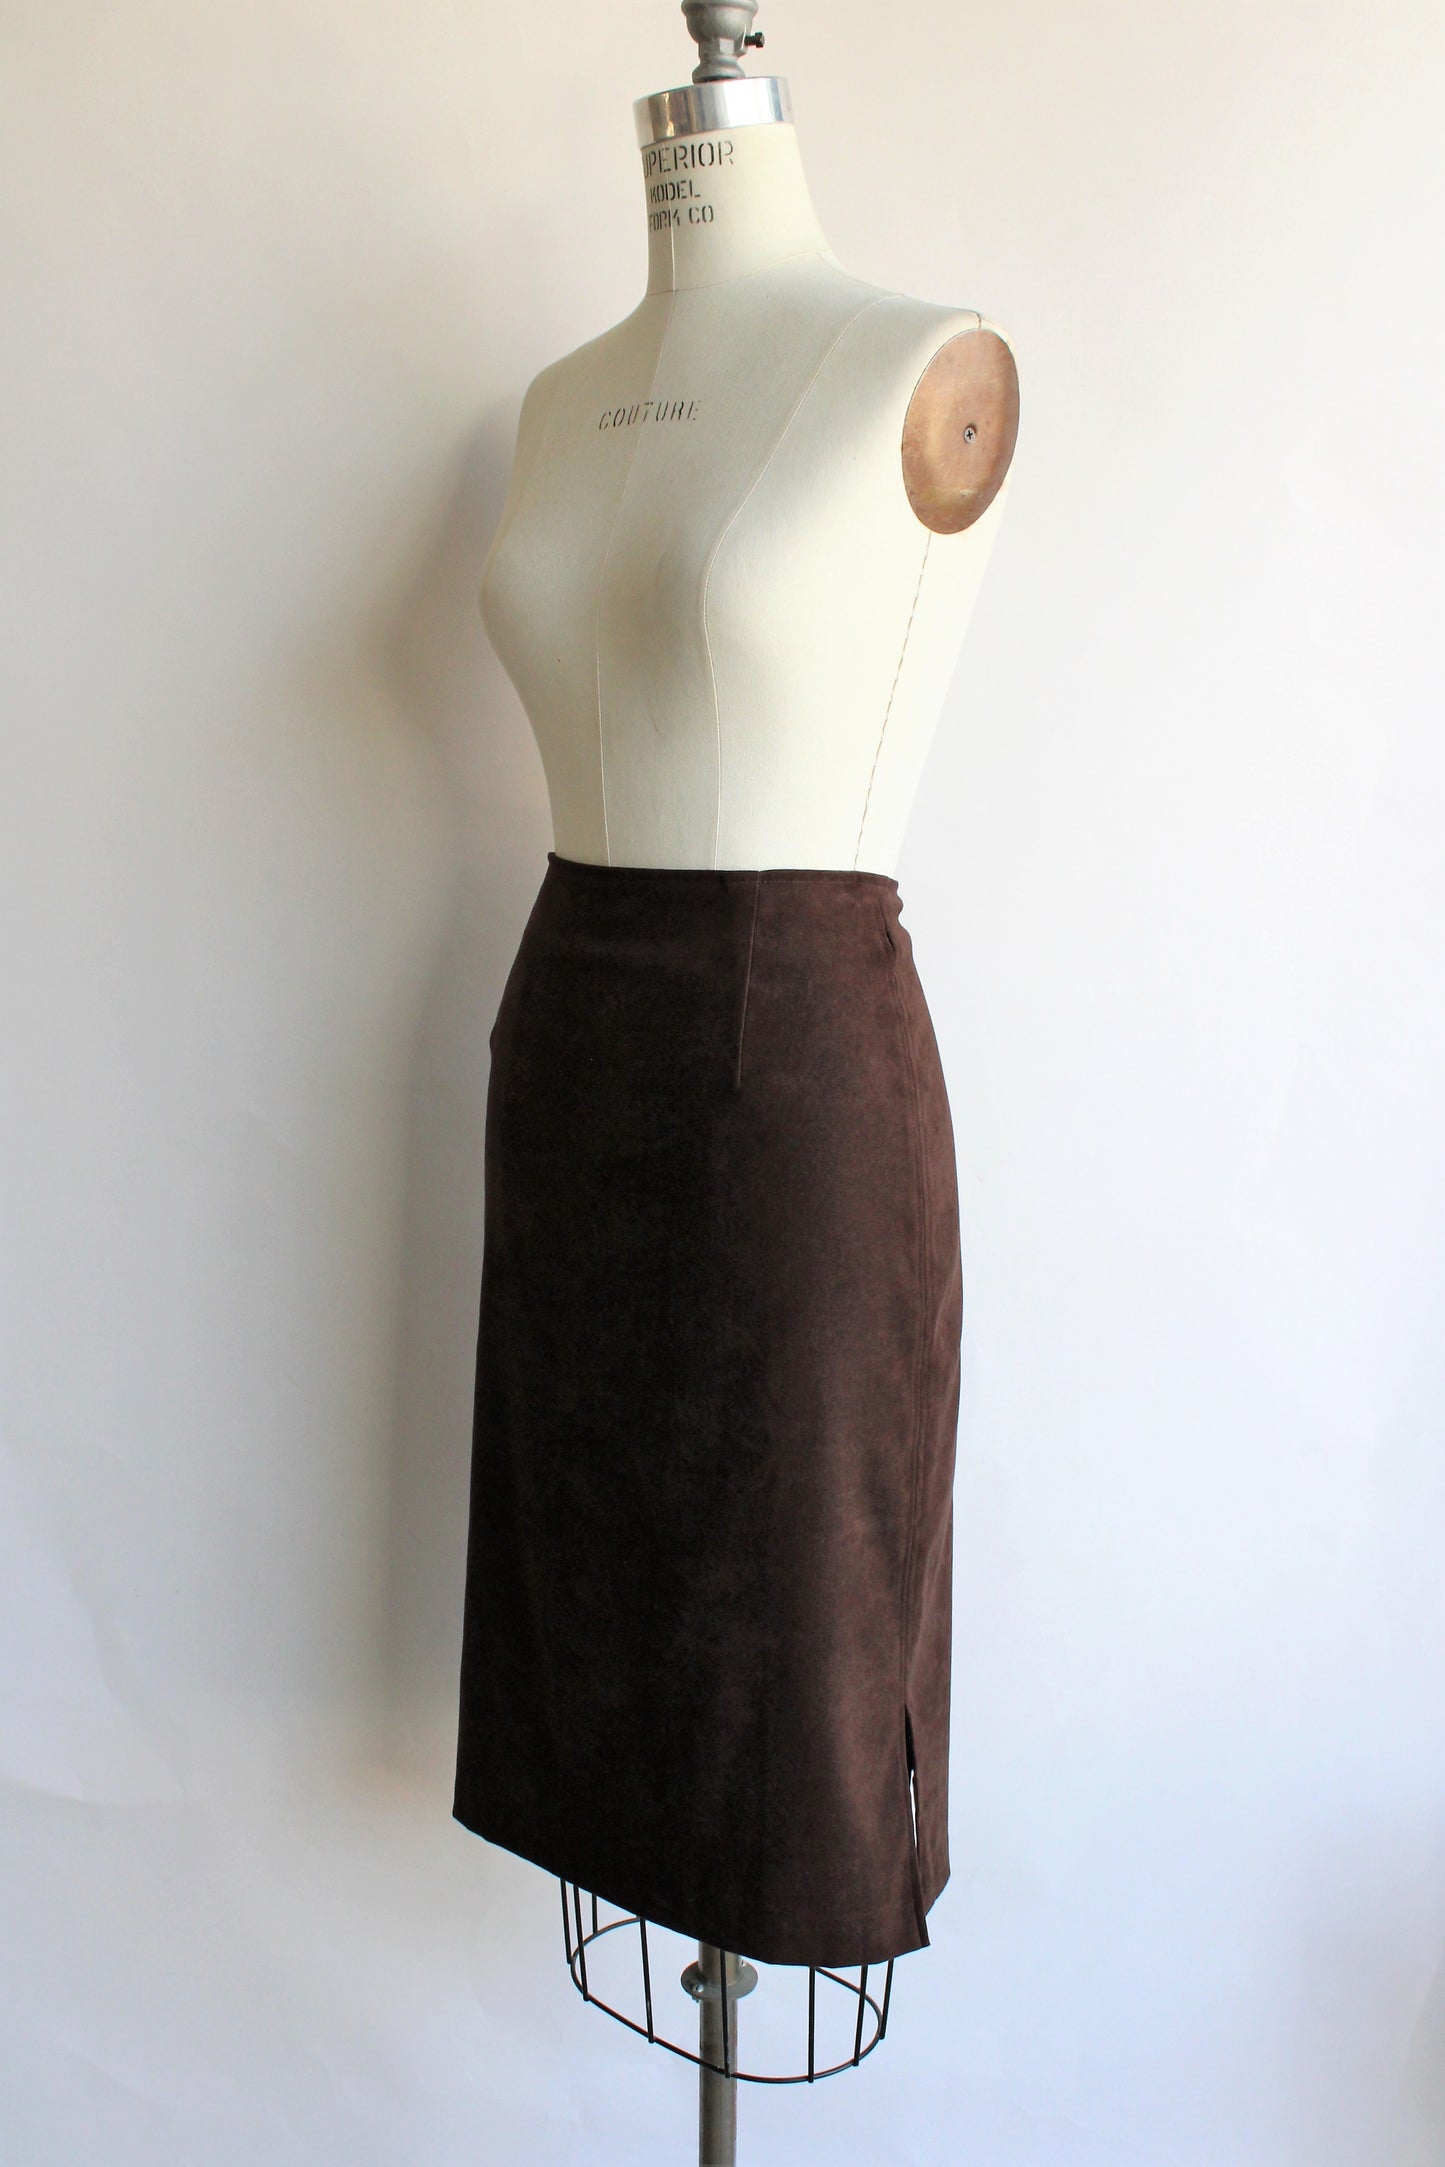 Vintage 1990s Brown Faux Suede Pencil Skirt